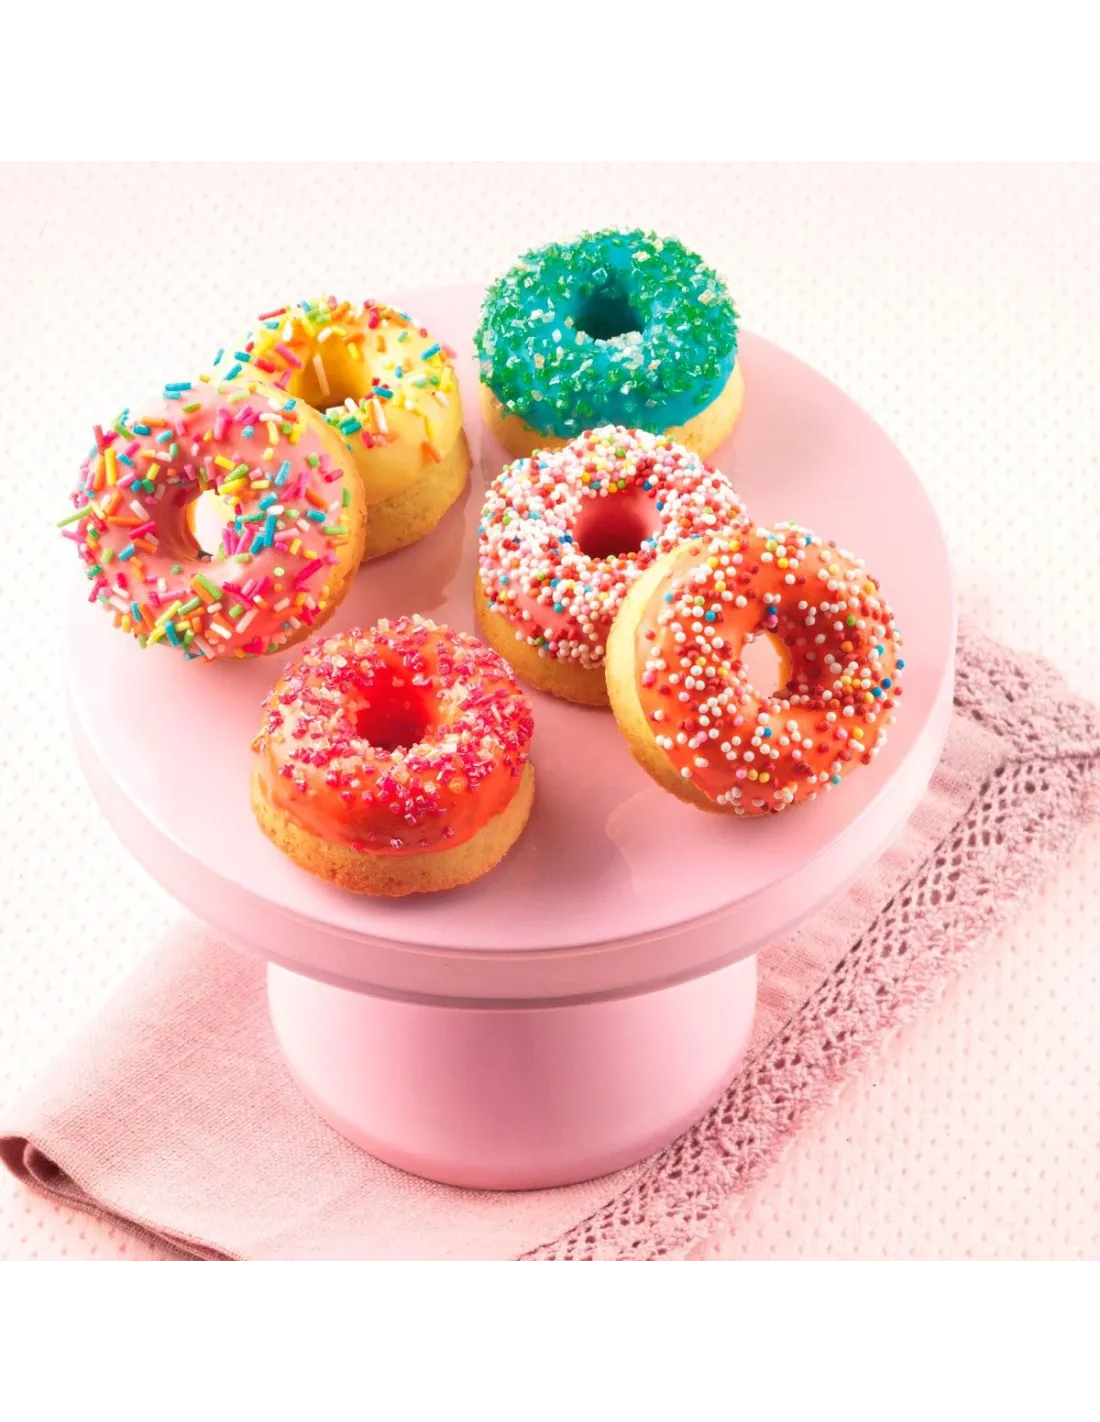 Molde Donuts De Silicona De Silikomart